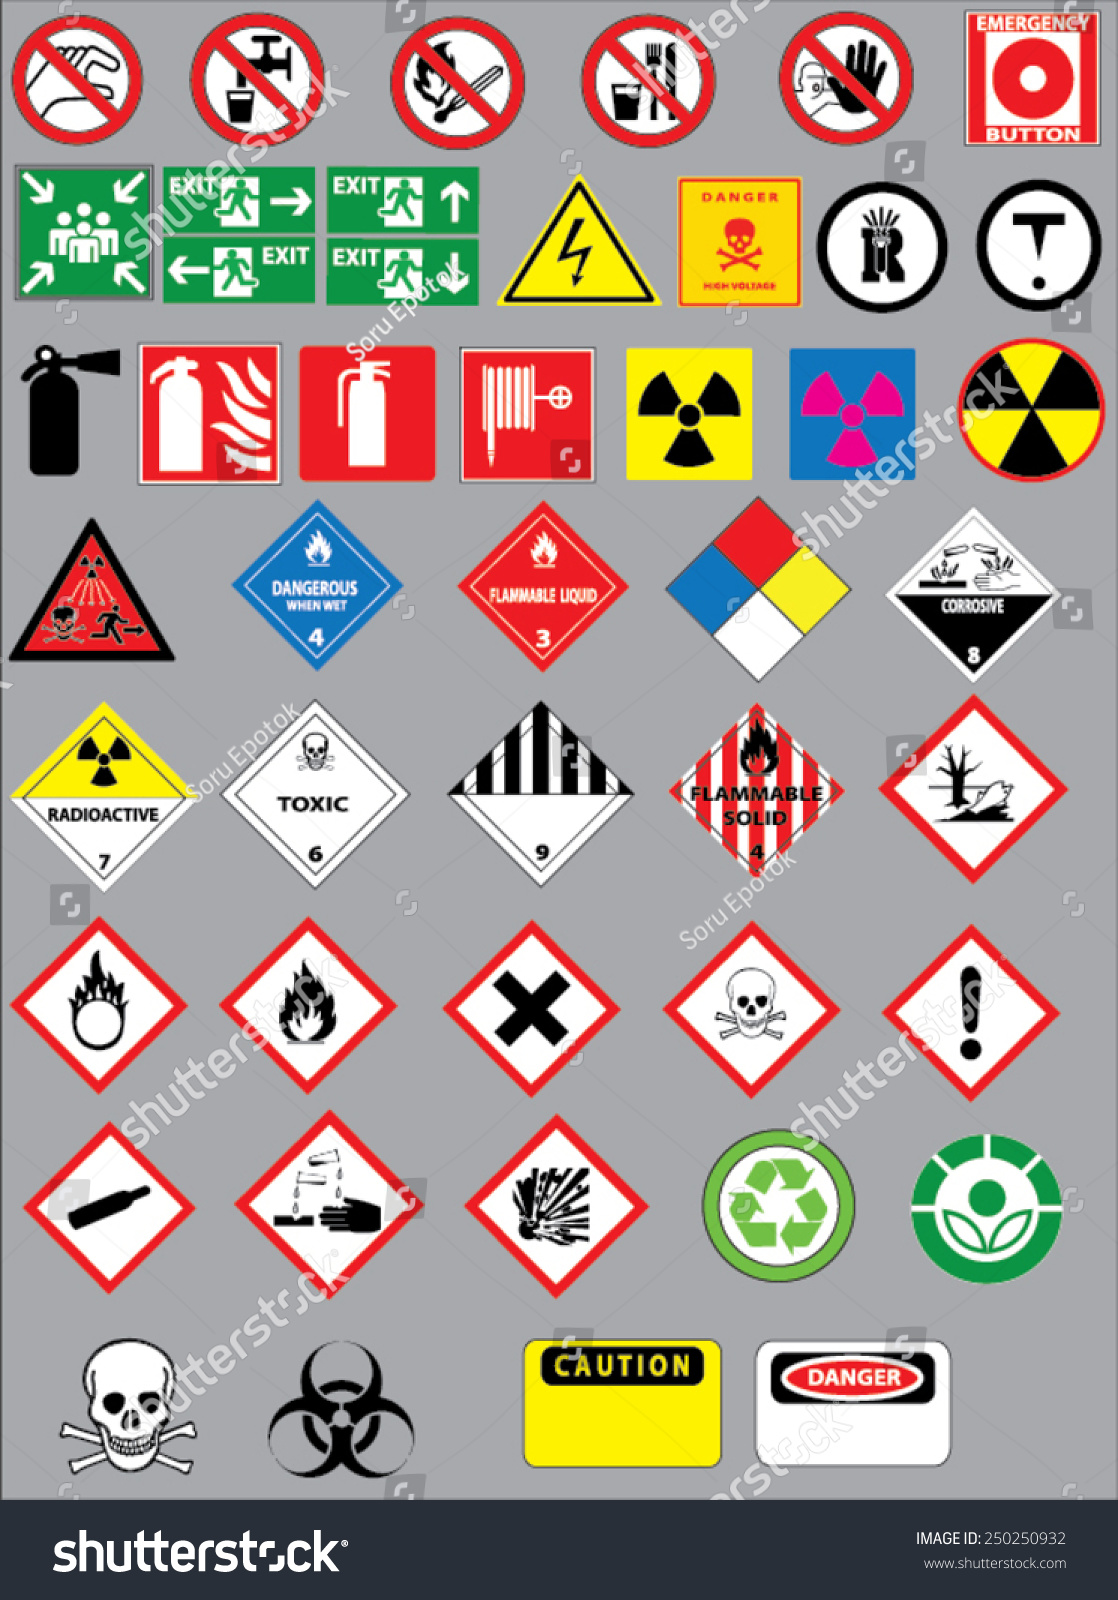 Chemistry Hazard And Warning Symbols Vector Set Shutterstock